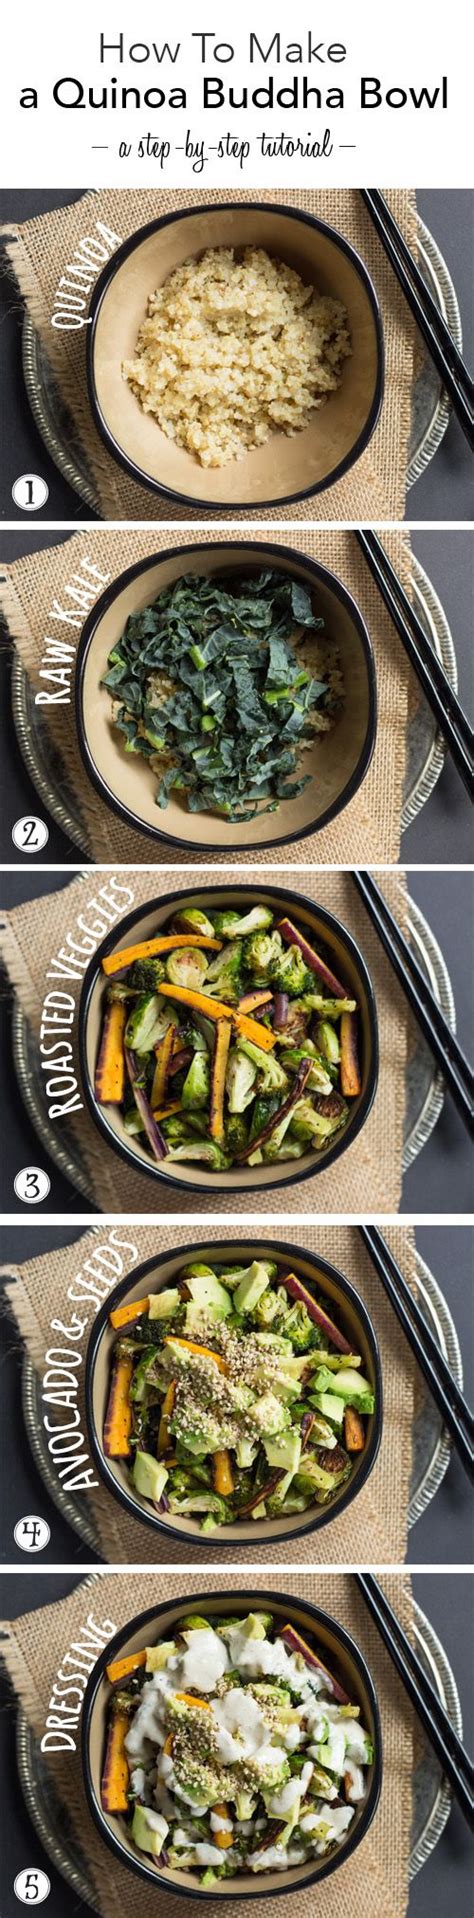 There are 550 calories in 1 bowl of rubio's cilantro lime quinoa bowl. Quinoa Buddha Bowl | Recipe | Vegan eating, Healthy, Bowls ...